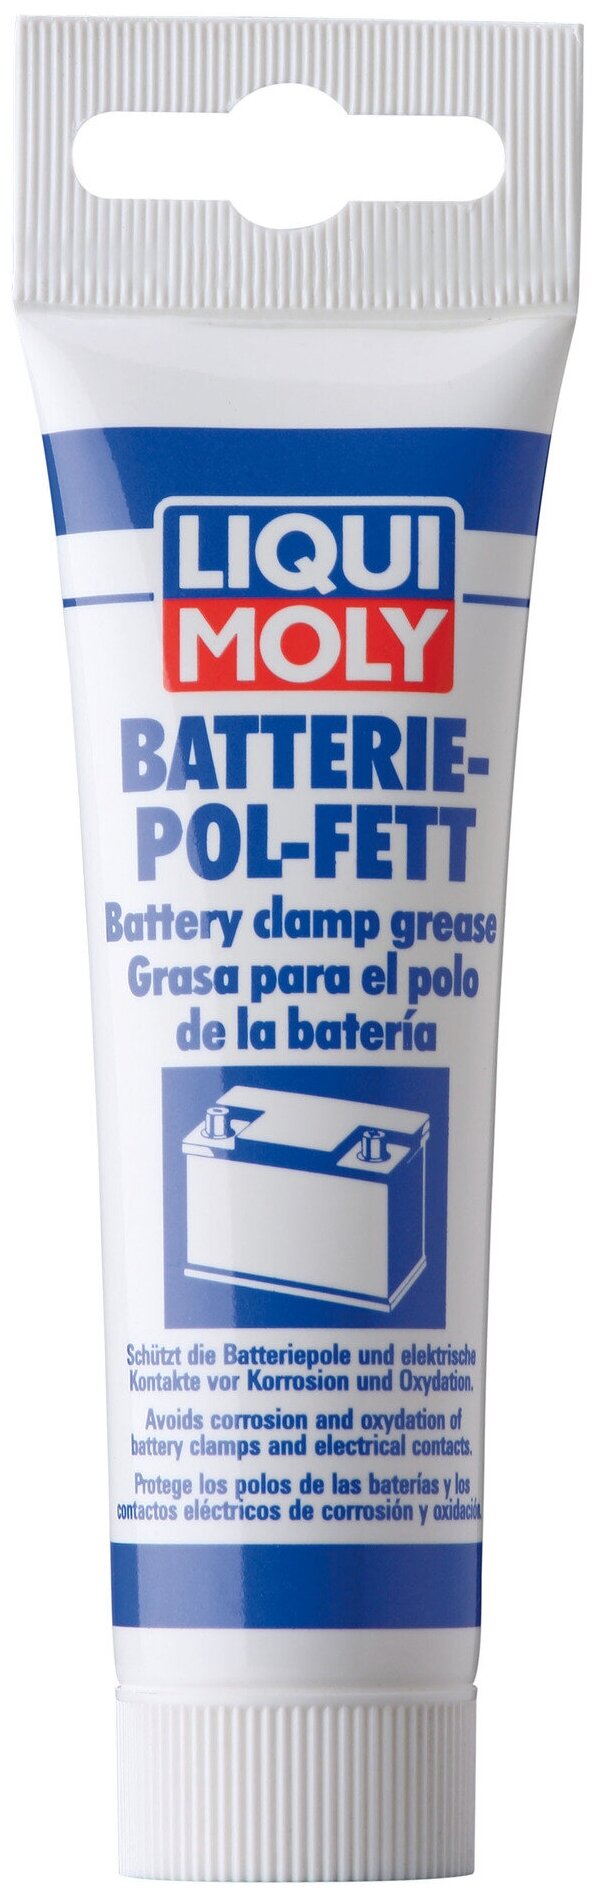  LIQUI MOLY Batterie-Pol-Fett 0.01 л 0.01 кг 1 —  в .